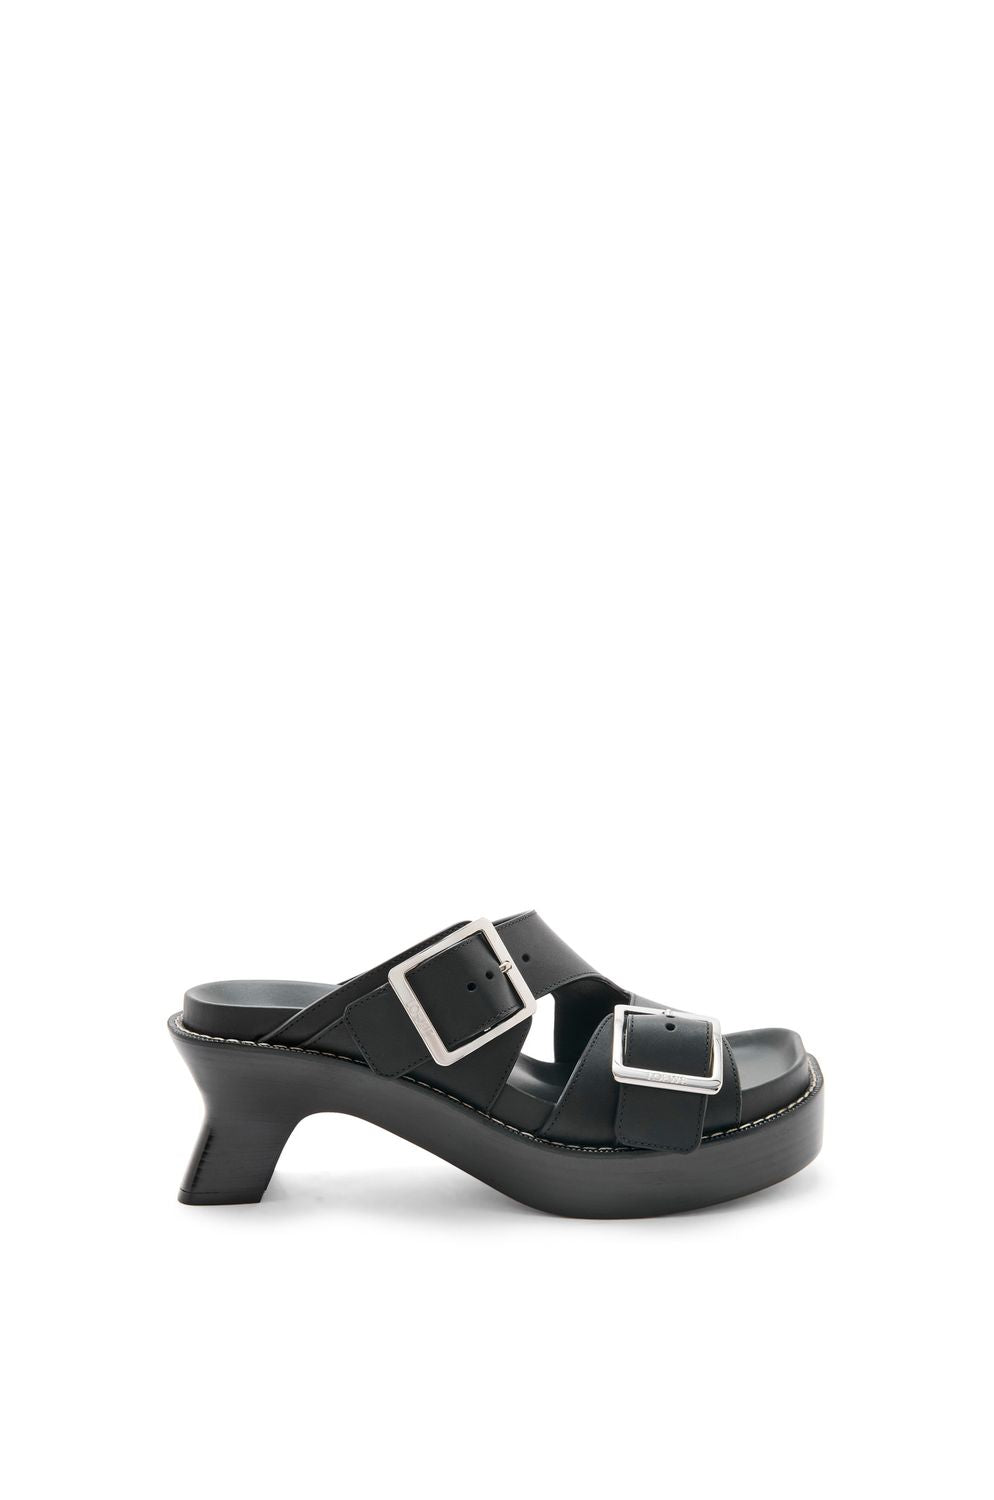 LOEWE Easy Black Sandals for the Modern Woman